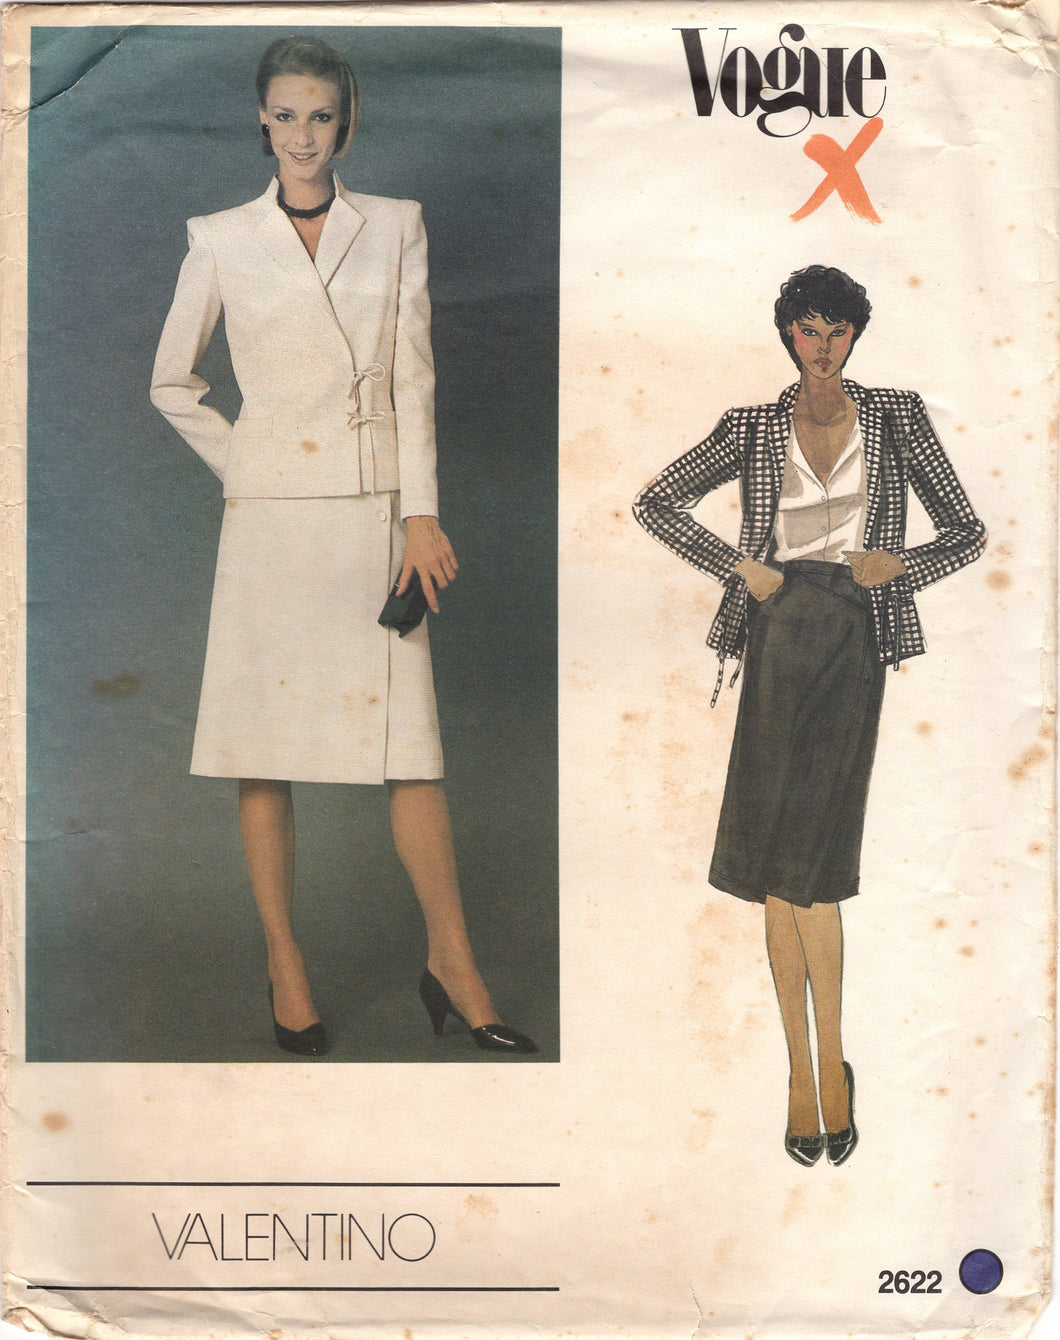 1980's Vogue Paris Original Bias Cut Jacket with side ties and Straight Skirt - Valentino - Bust 36